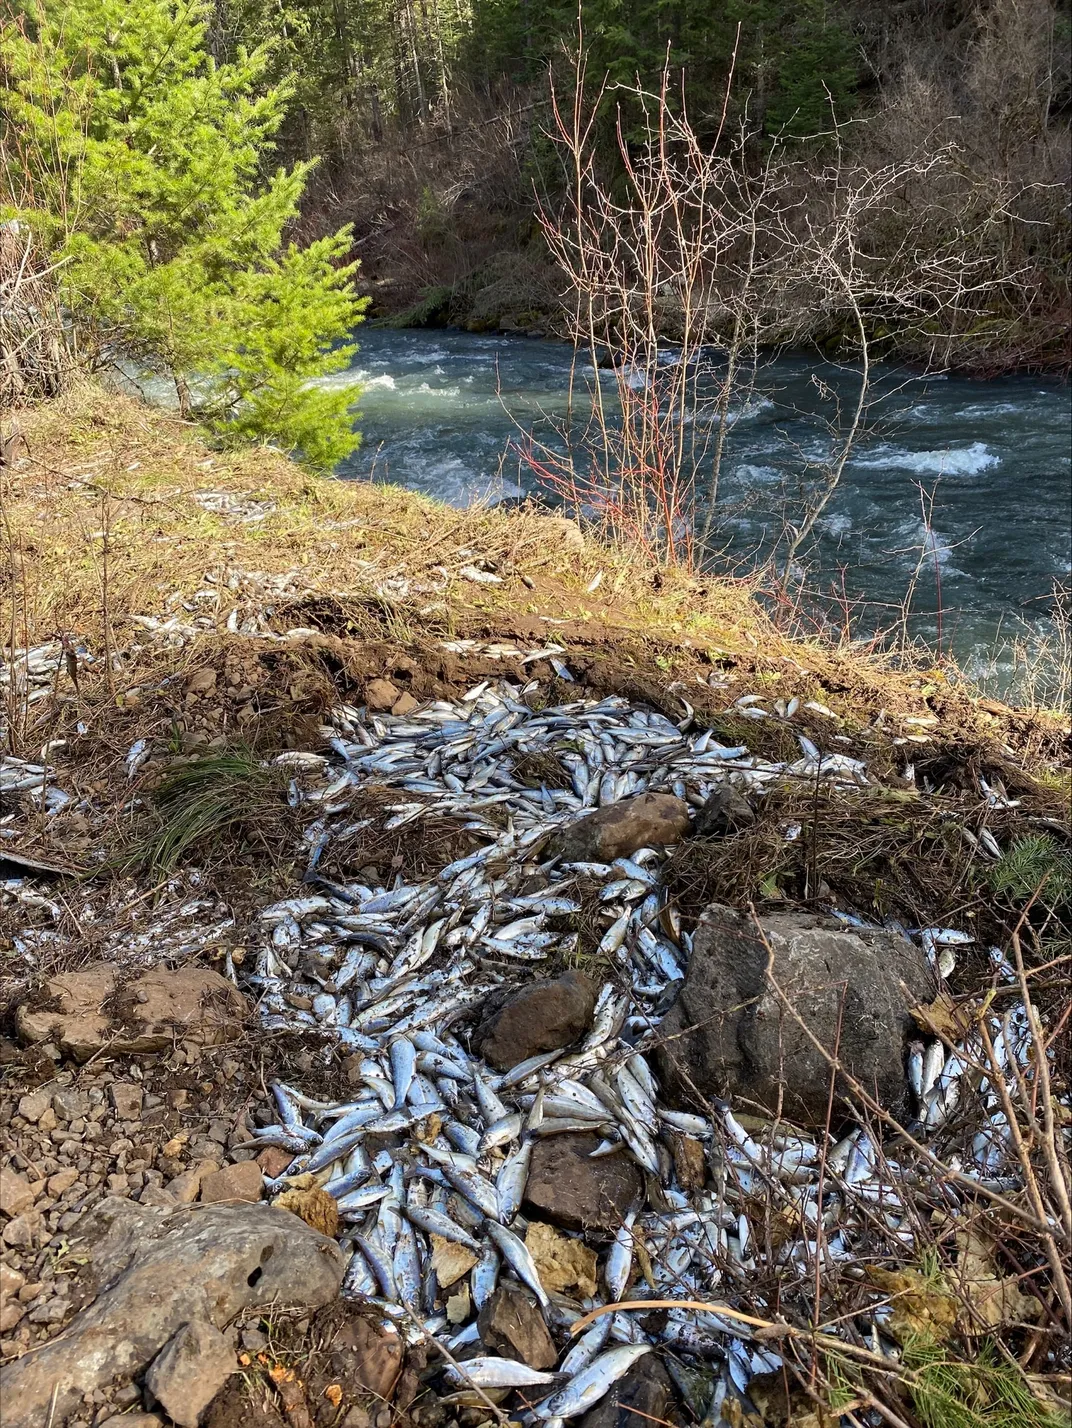 Dead fish on stream bank